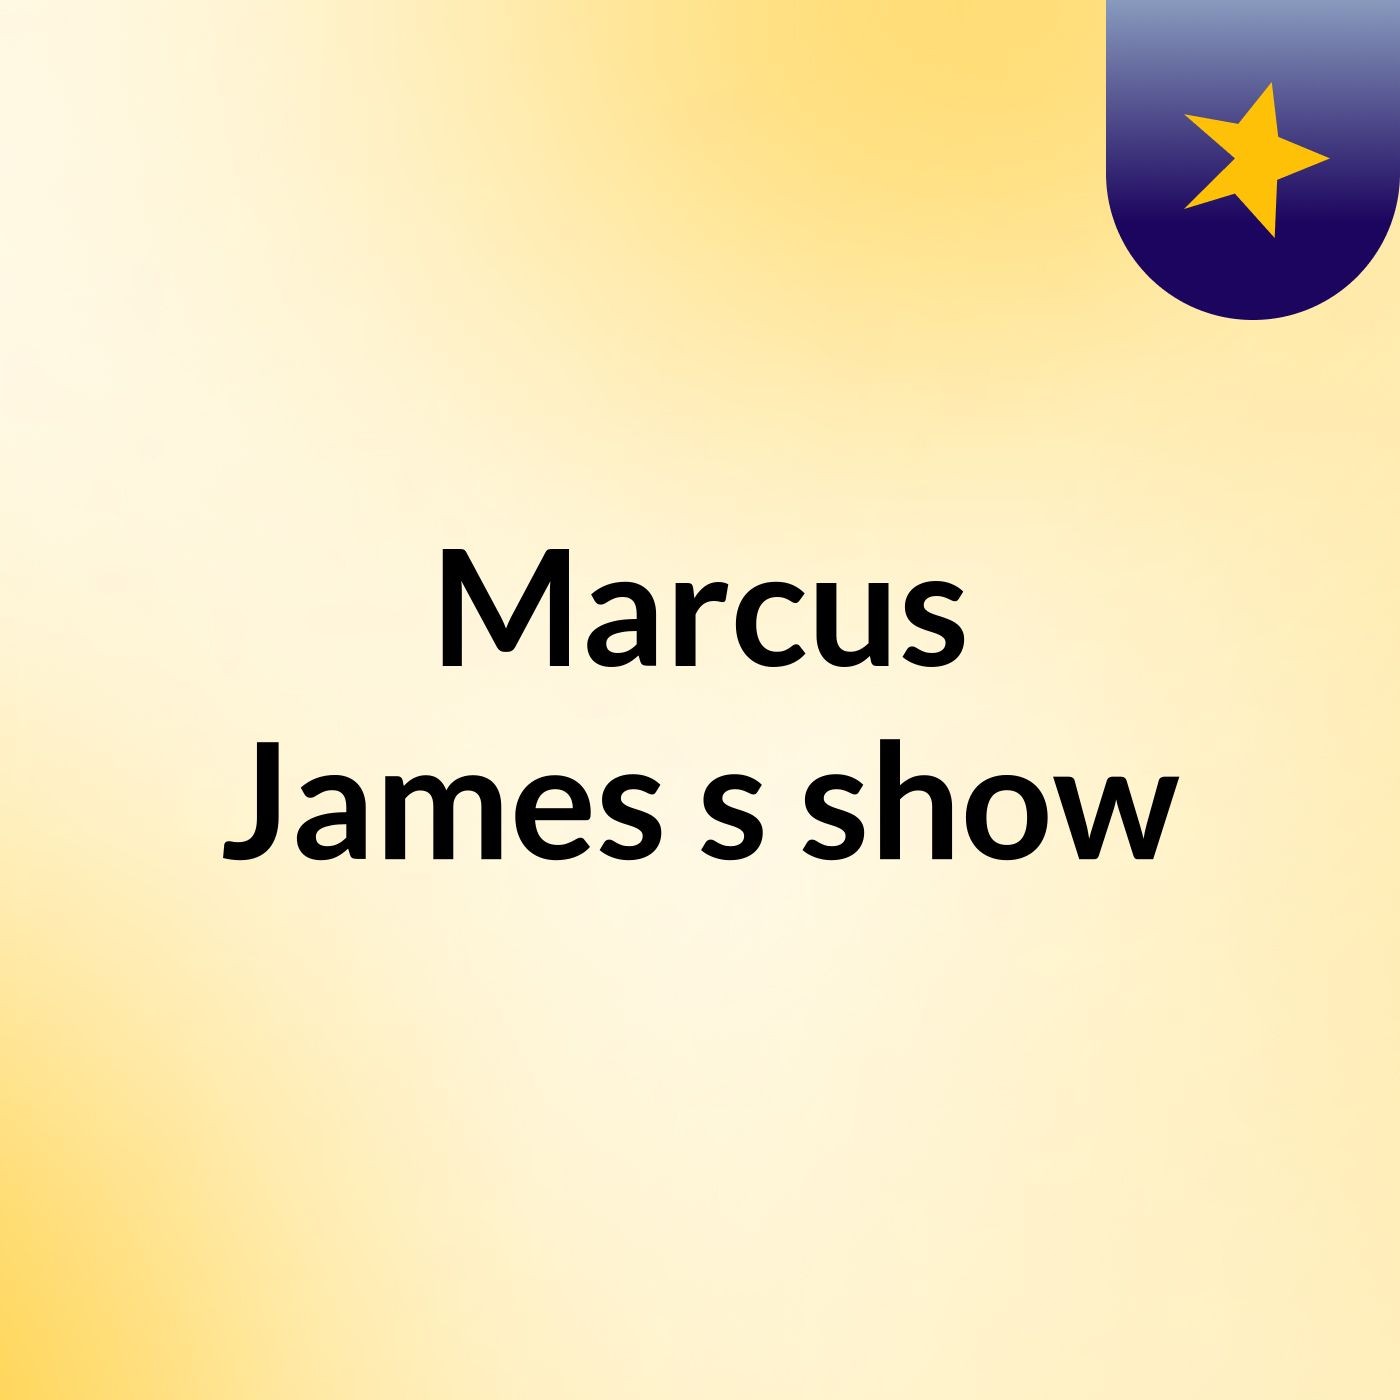 Episode 10 - Marcus James's show